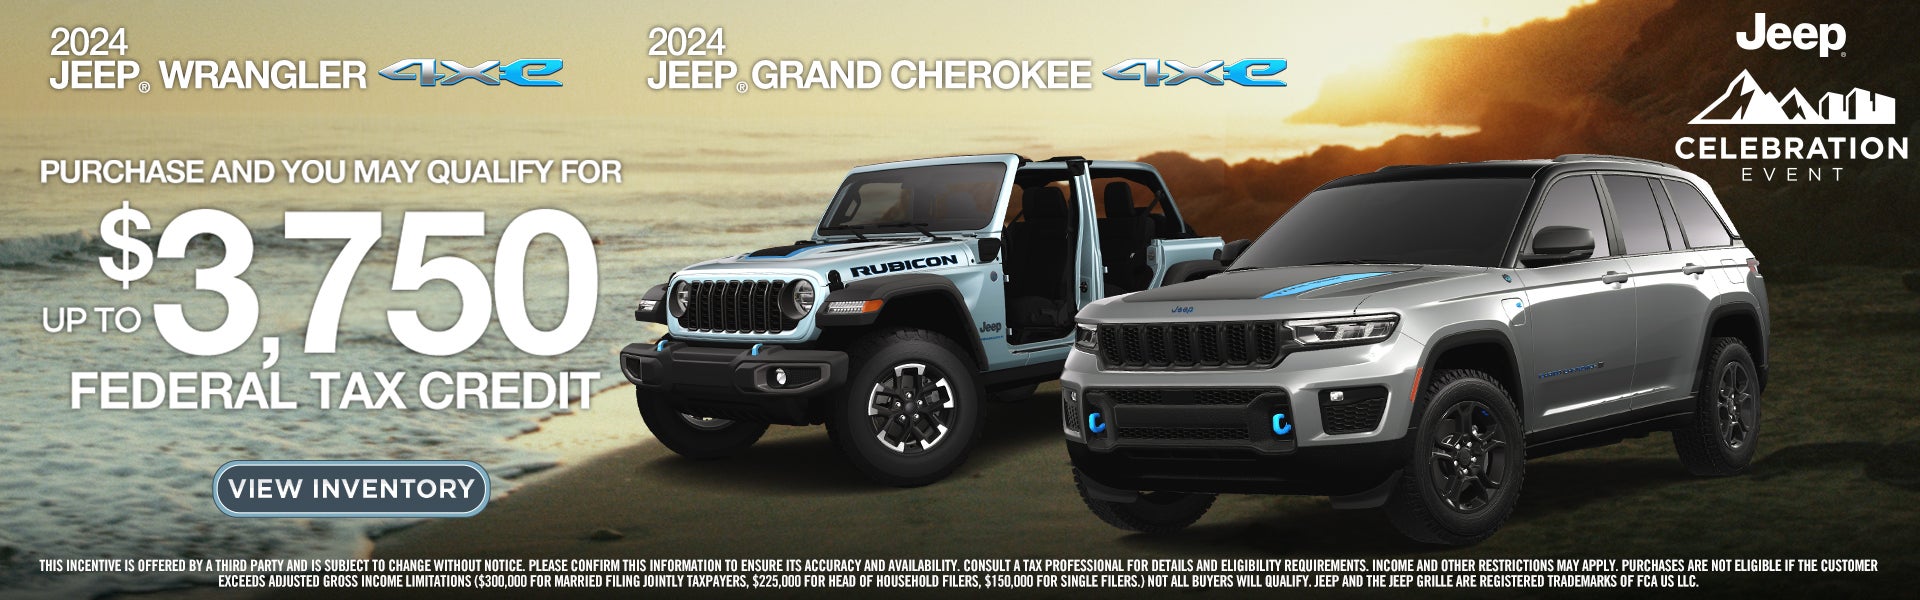 2024 Jeep Wrangler 4xe and Jeep Grand Cherokee 4xe